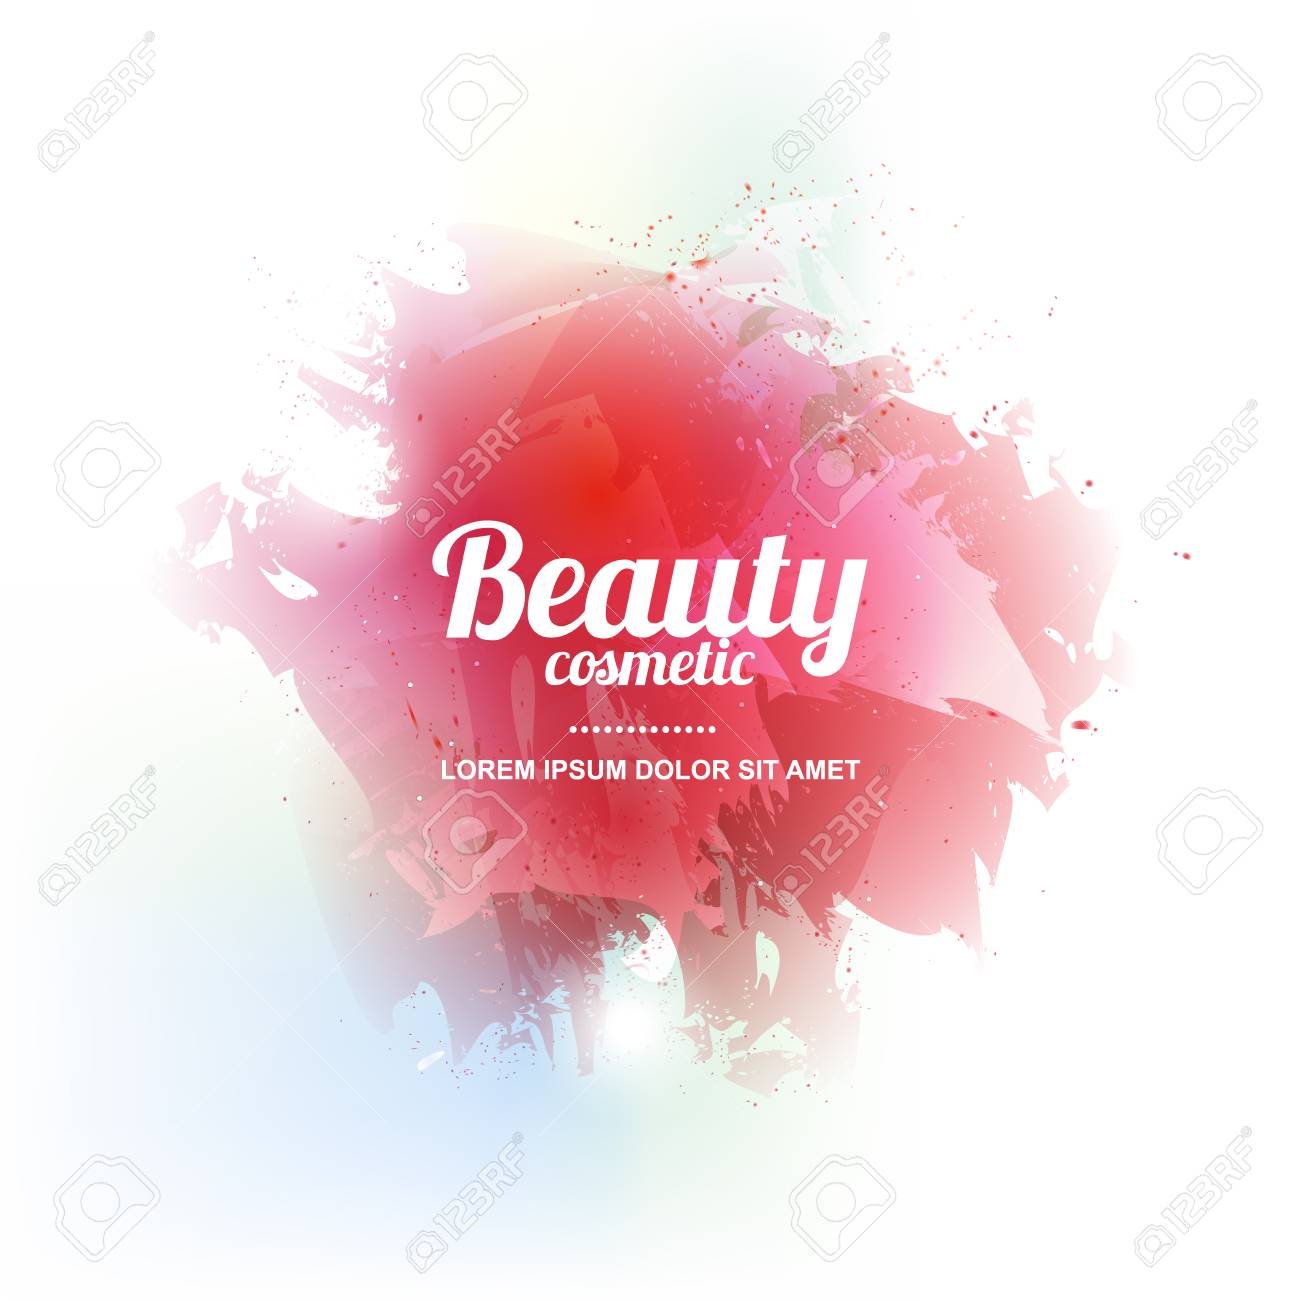 Beauty Cosmetics Design Advertisement Wallpaper Royalty